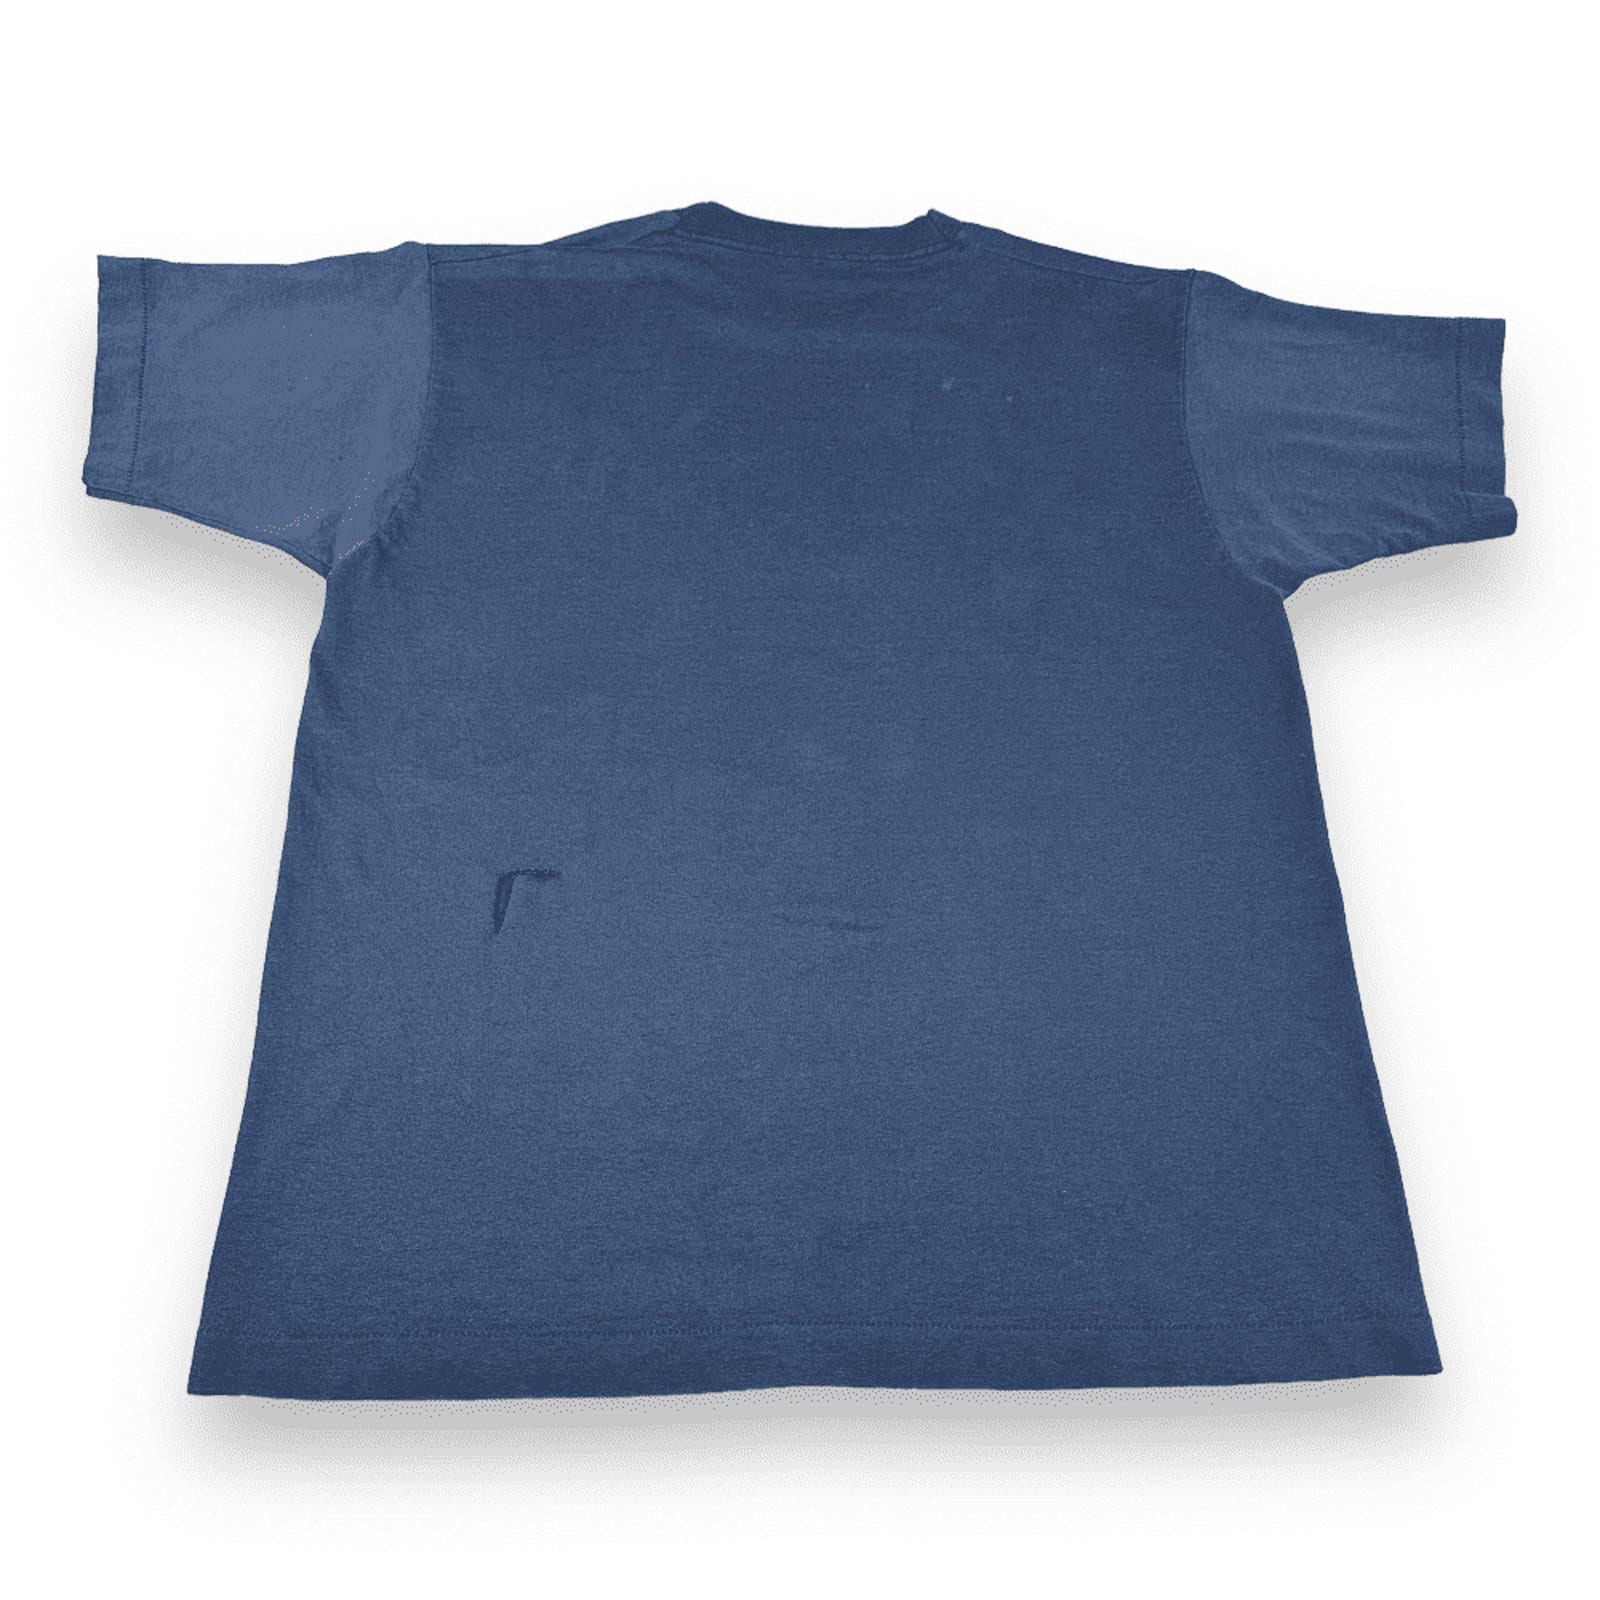 Vintage Ready Mixed Concrete Shirt Adult MEDIUM Blue 80s RMC